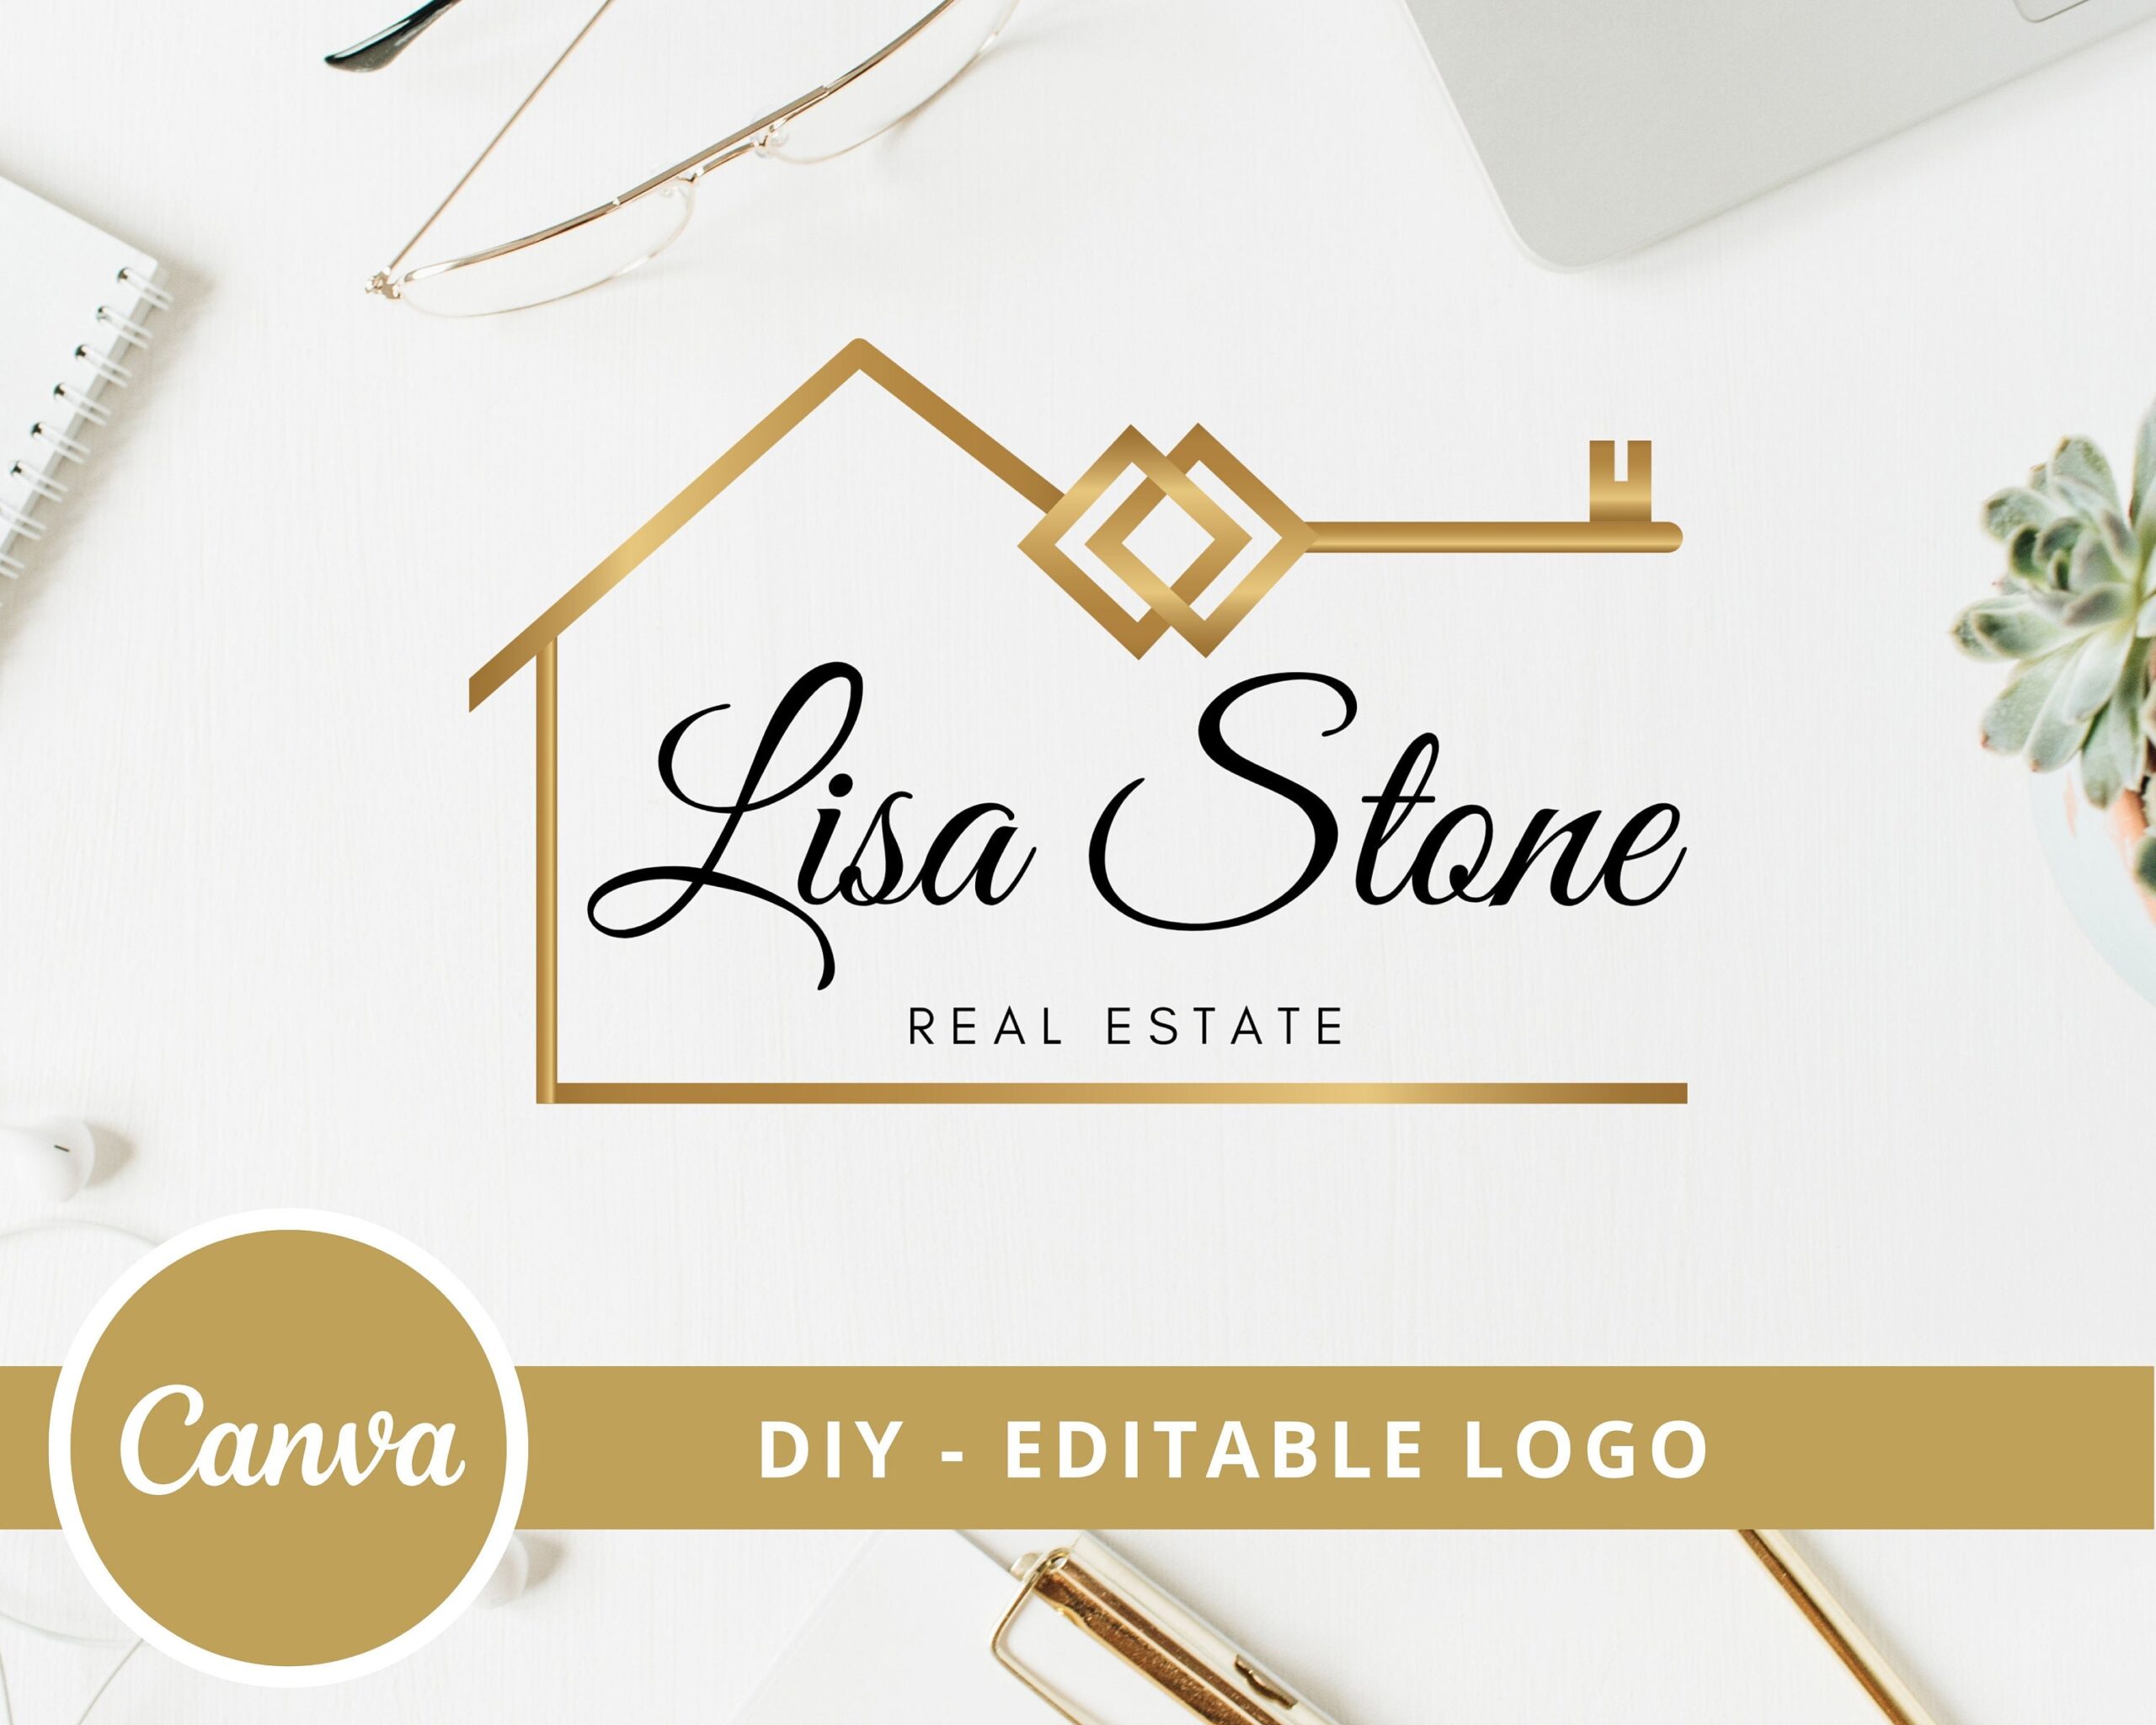 DIY Premade Logo Design Template for Real Estate Agents - Golden Logo, Signature Logo, House and Key Logo - DIY Design - Instant Access